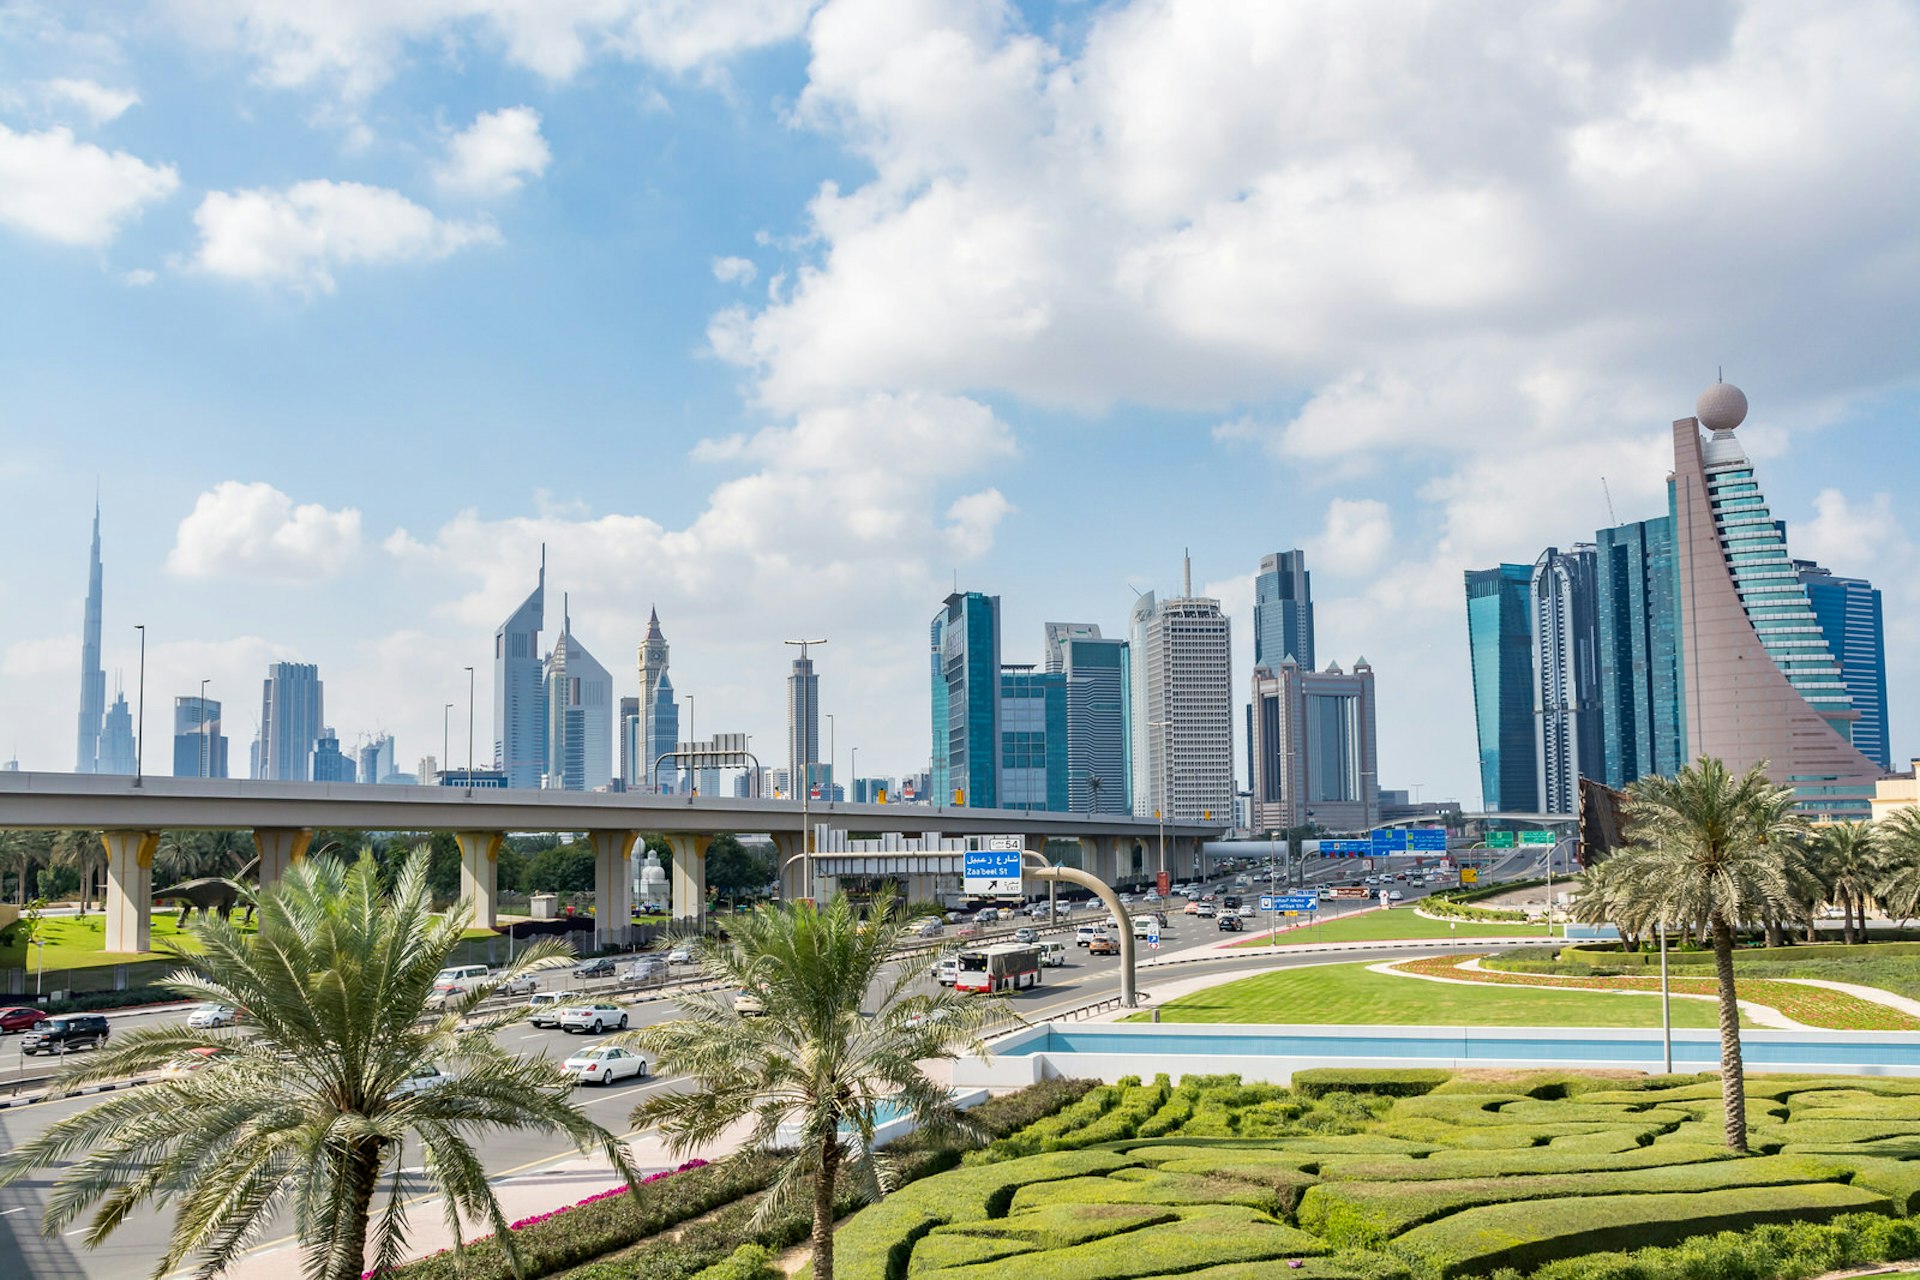 Zabeel Park in Dubai. Image by FevreDream / Getty